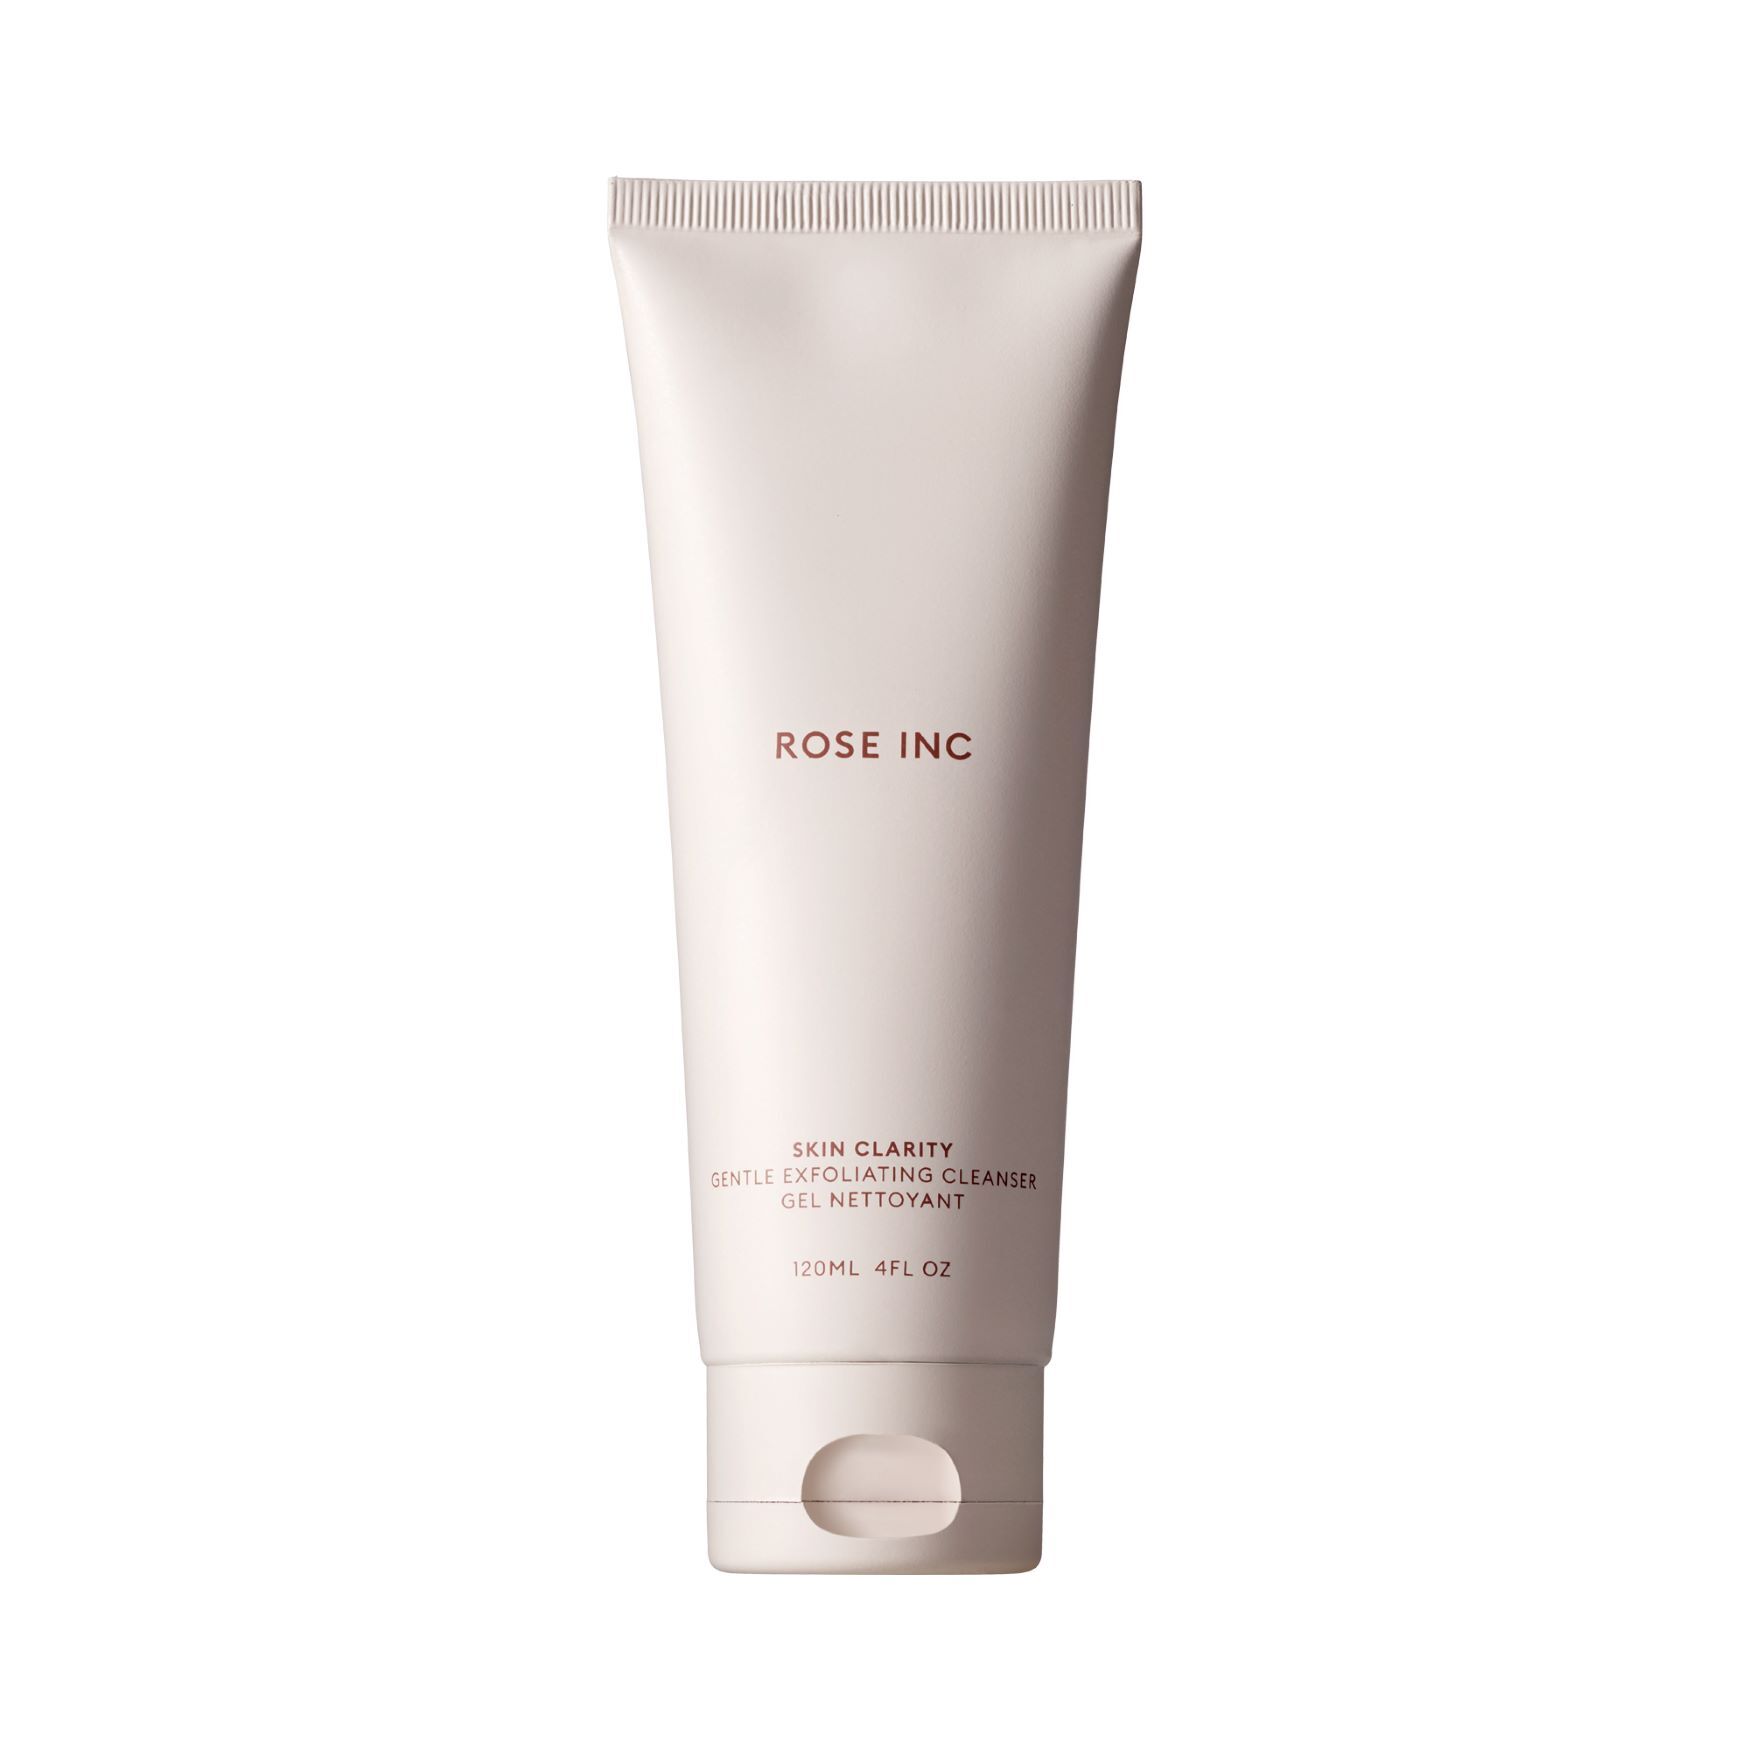 ROSE INC - Skin Clarity Gentle Exfoliating Cleanser